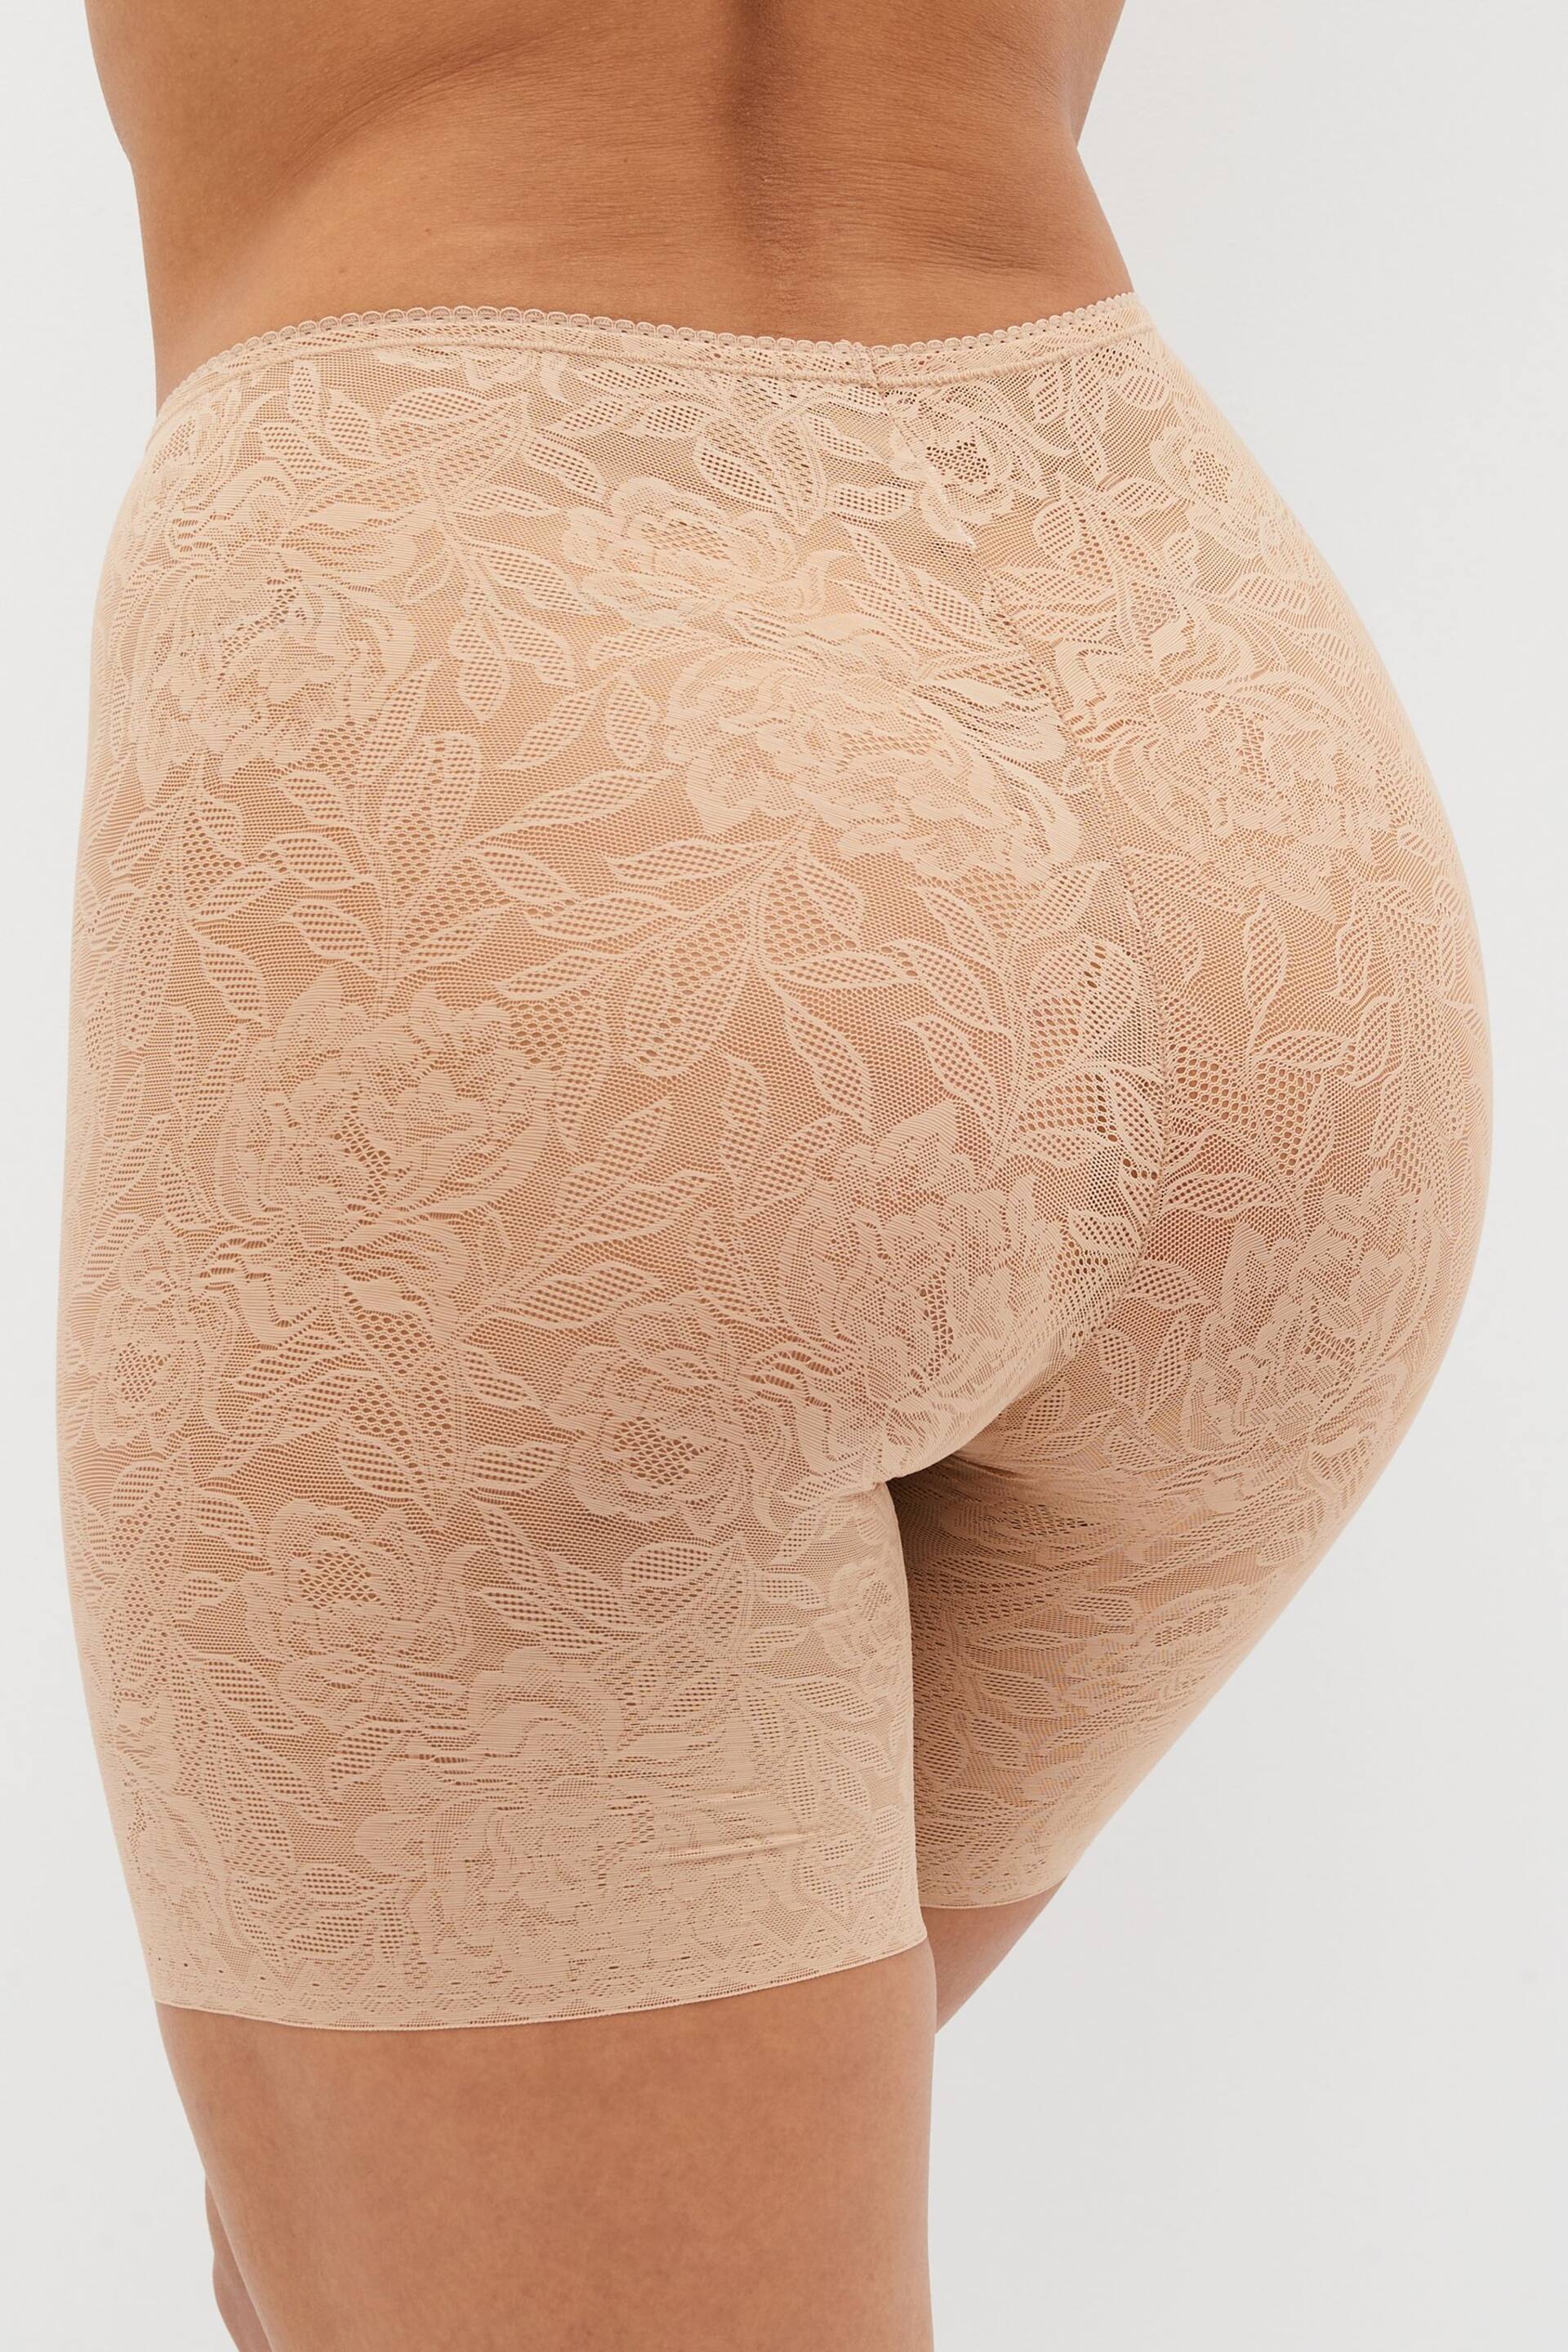 Nude Smoothing Lace Shorts - Image 2 of 4